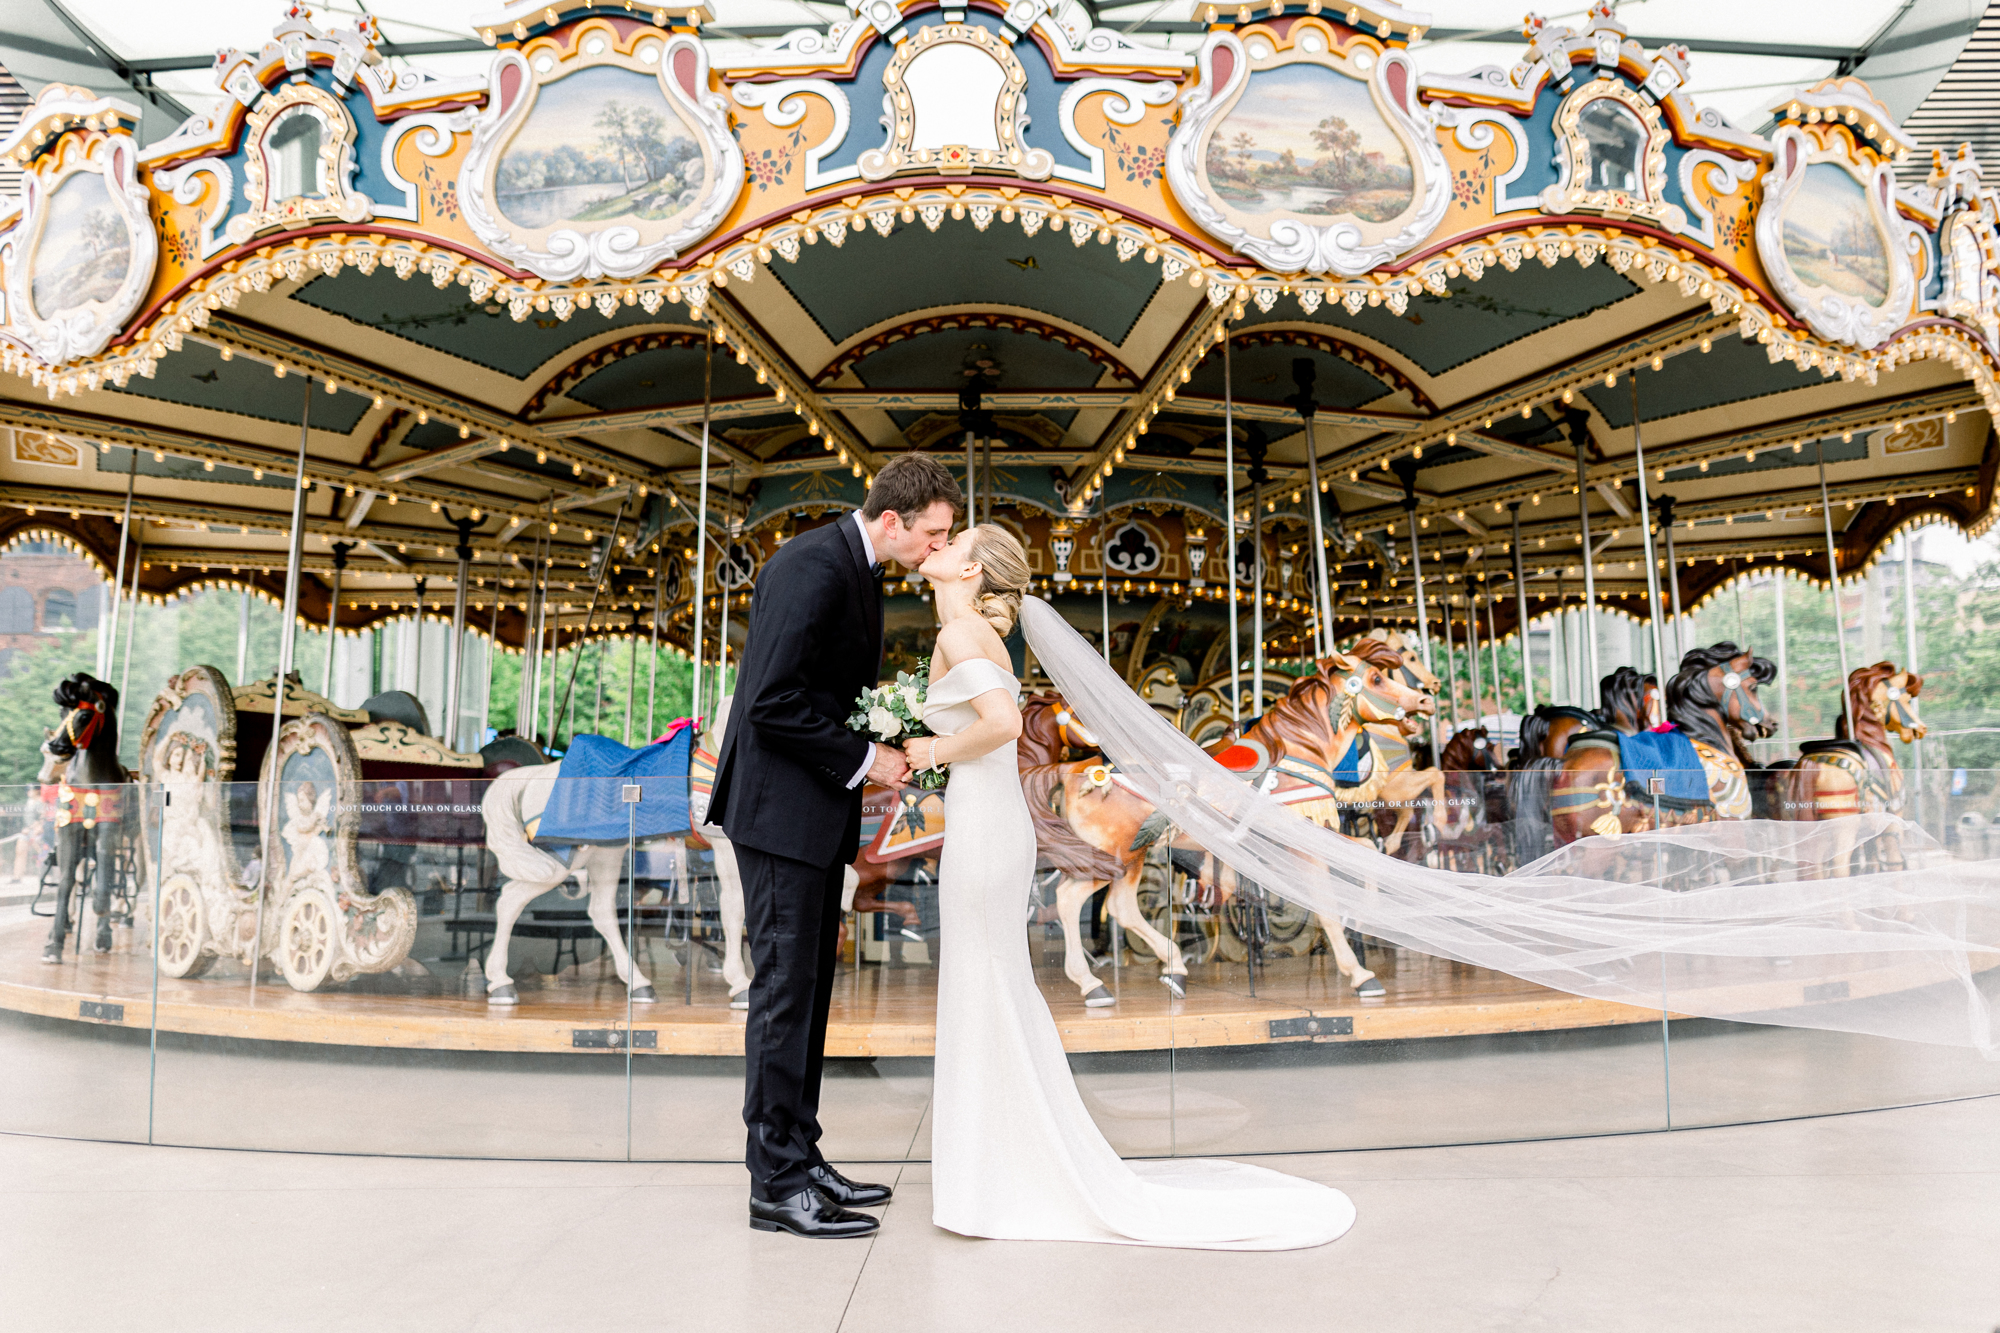 Small Intimate Carousel Wedding in Dumbo